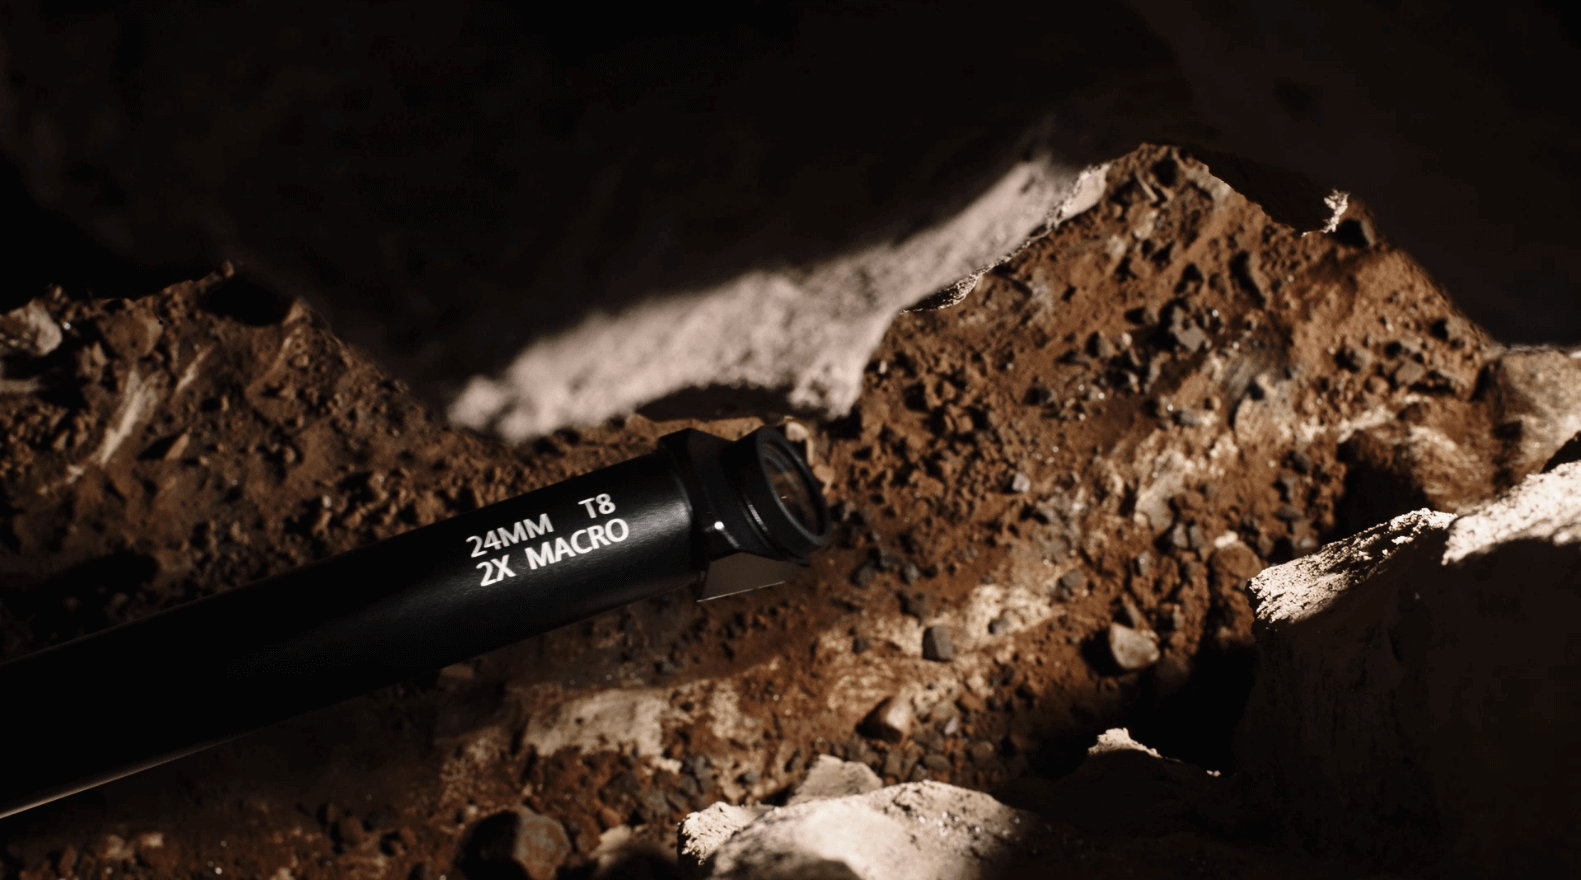 a black tube on a rock description automatically - Venus Optics launches the Laowa 24mm T8 2X Macro Pro2be series of Cinema Lenses